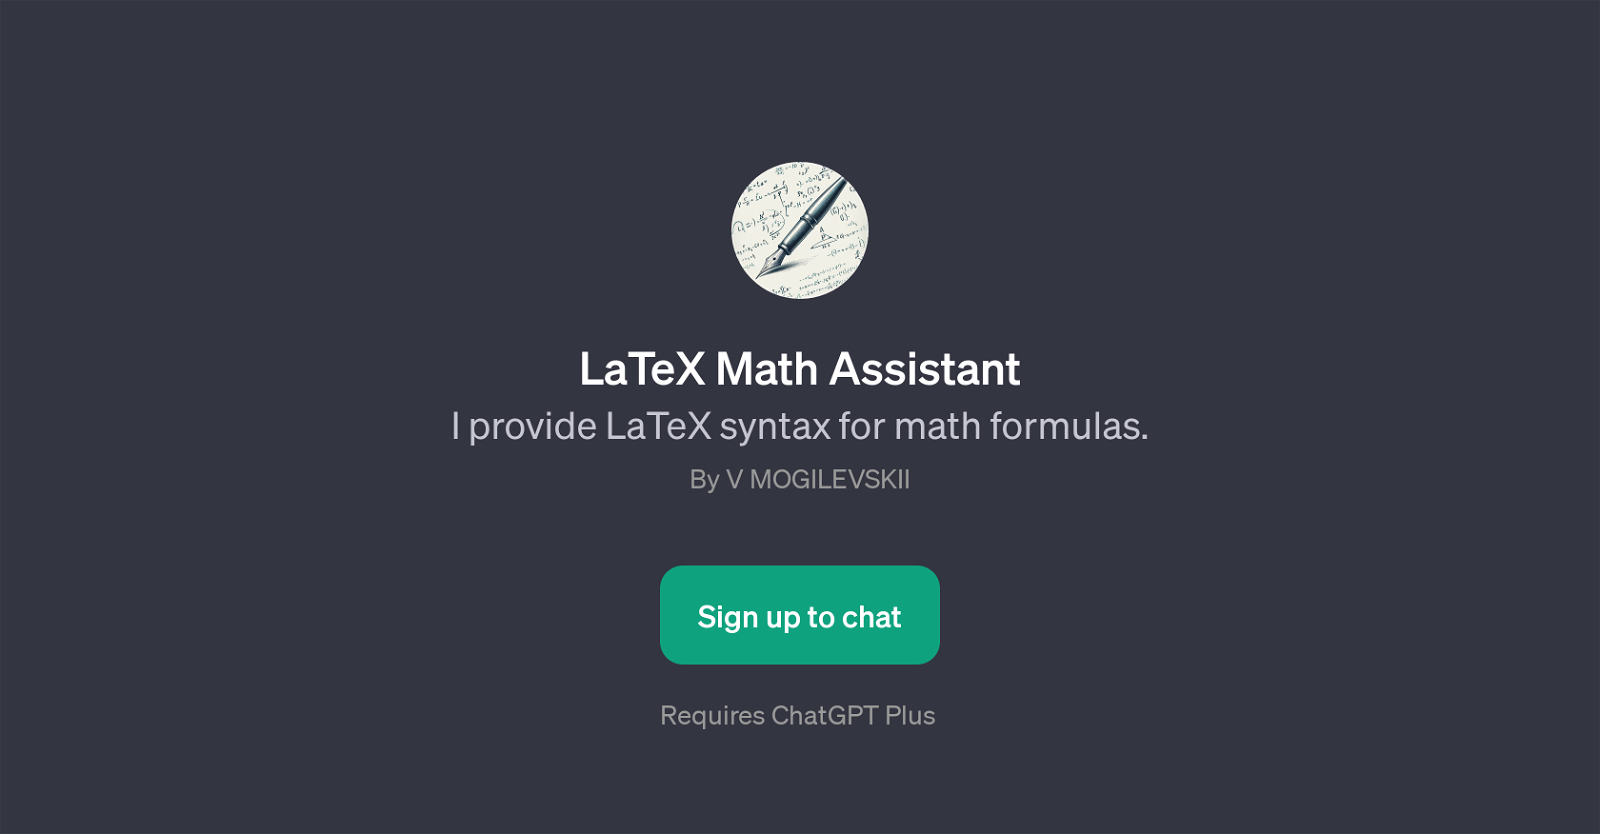 LaTeX Math Assistant website